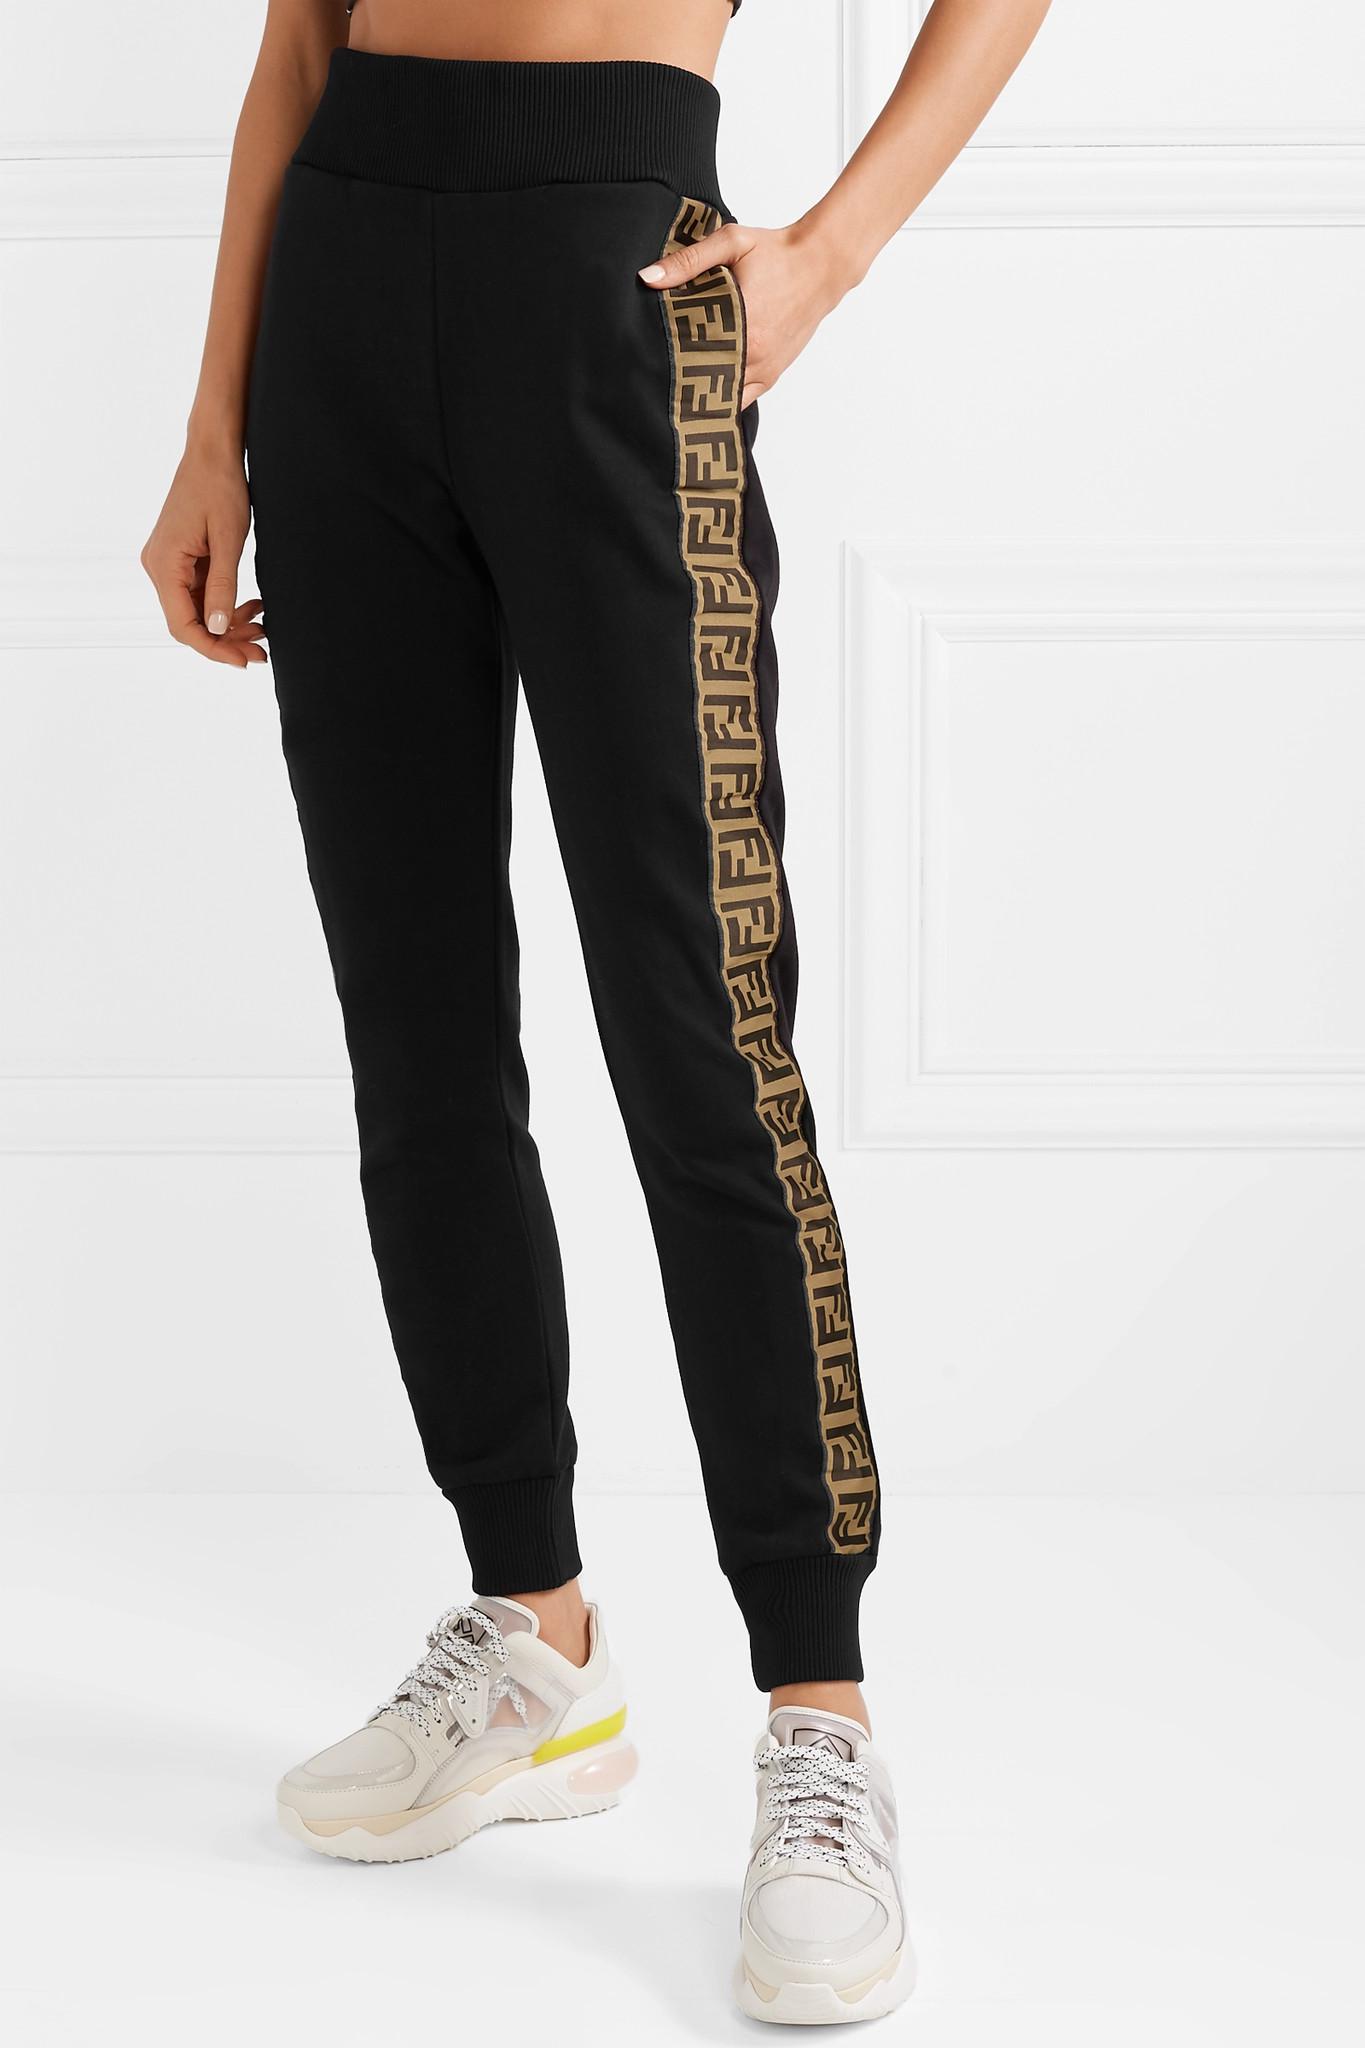 Fendi Black Sweatpants Styles, Prices - Trendyol